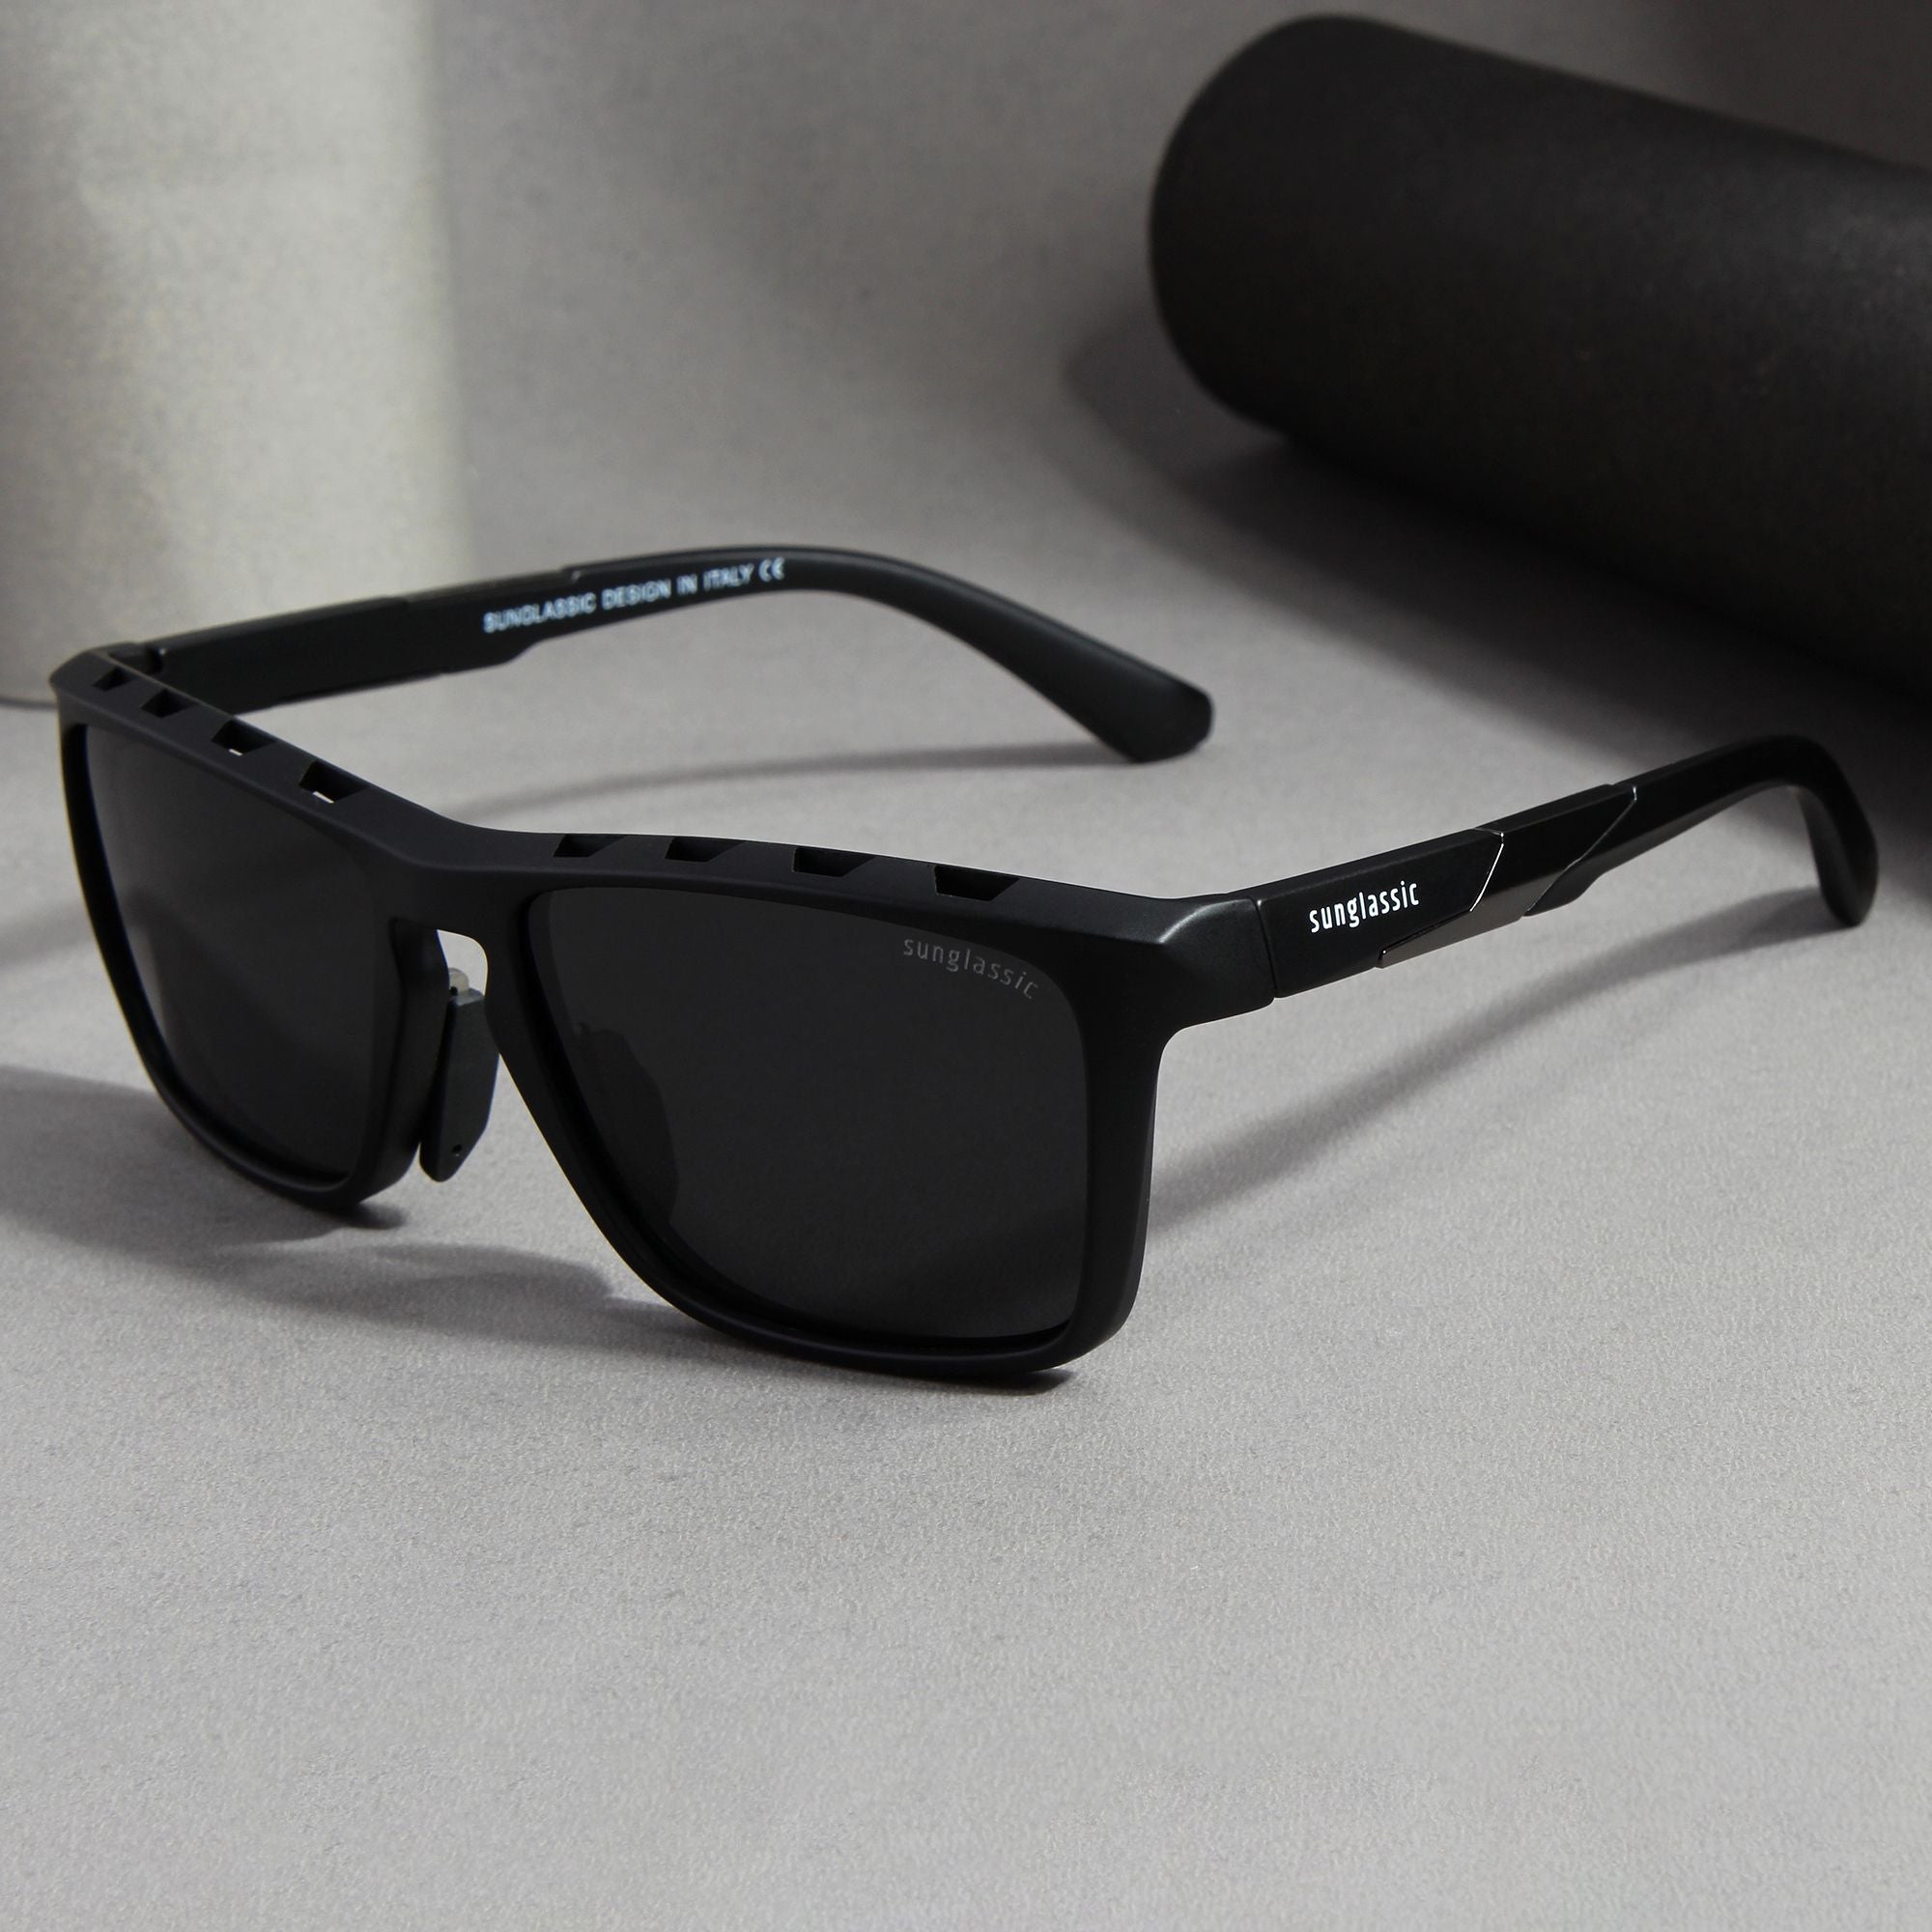 SUNGLASSIC Hawk Sunglasses - Black Polarized, Side Profile with TR90 Frame.